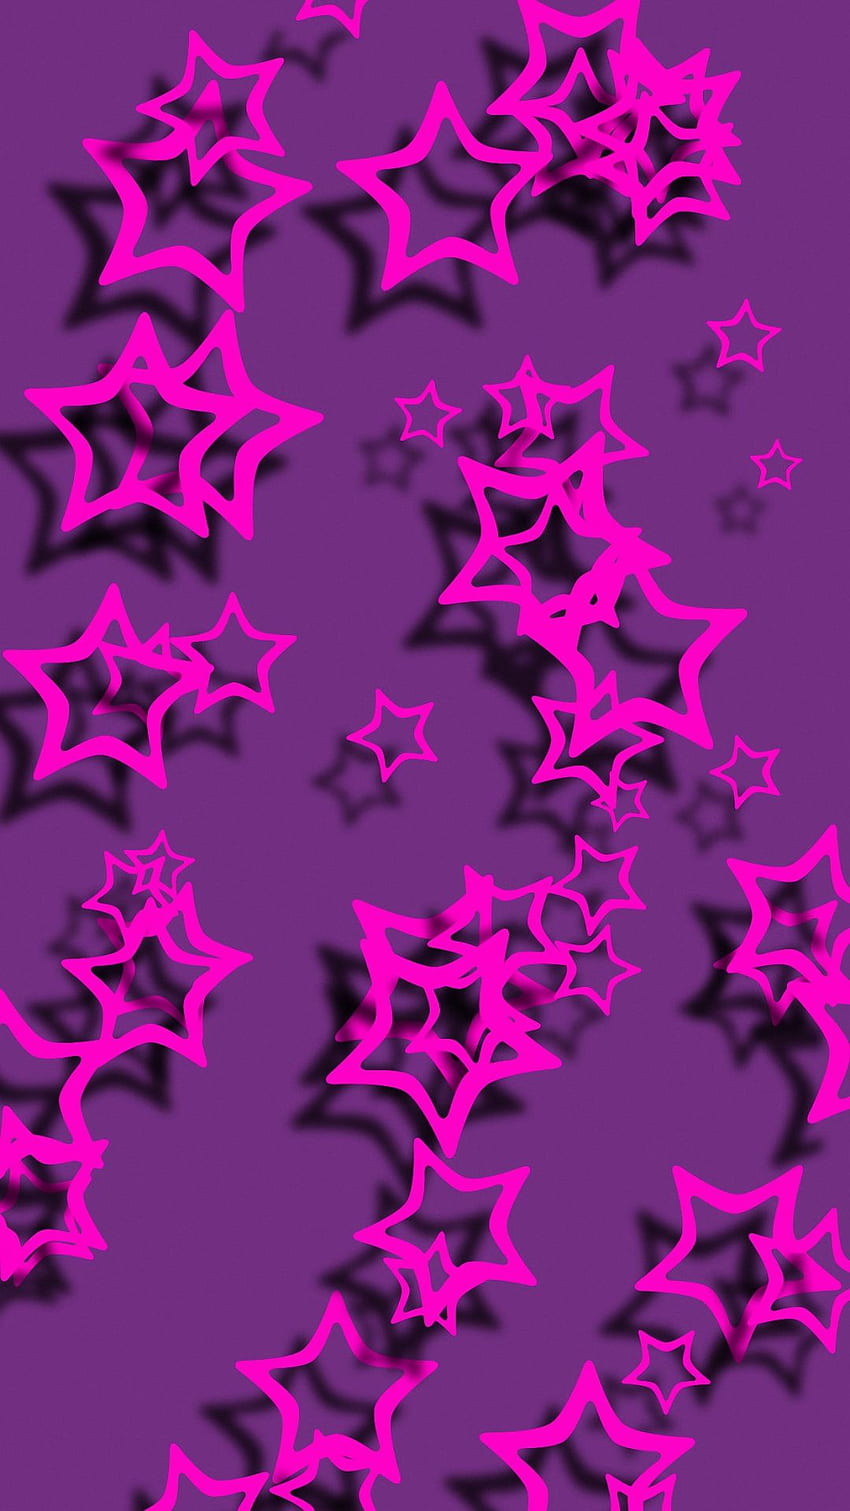 Free Pink Star Background  EPS Illustrator JPG SVG  Templatenet